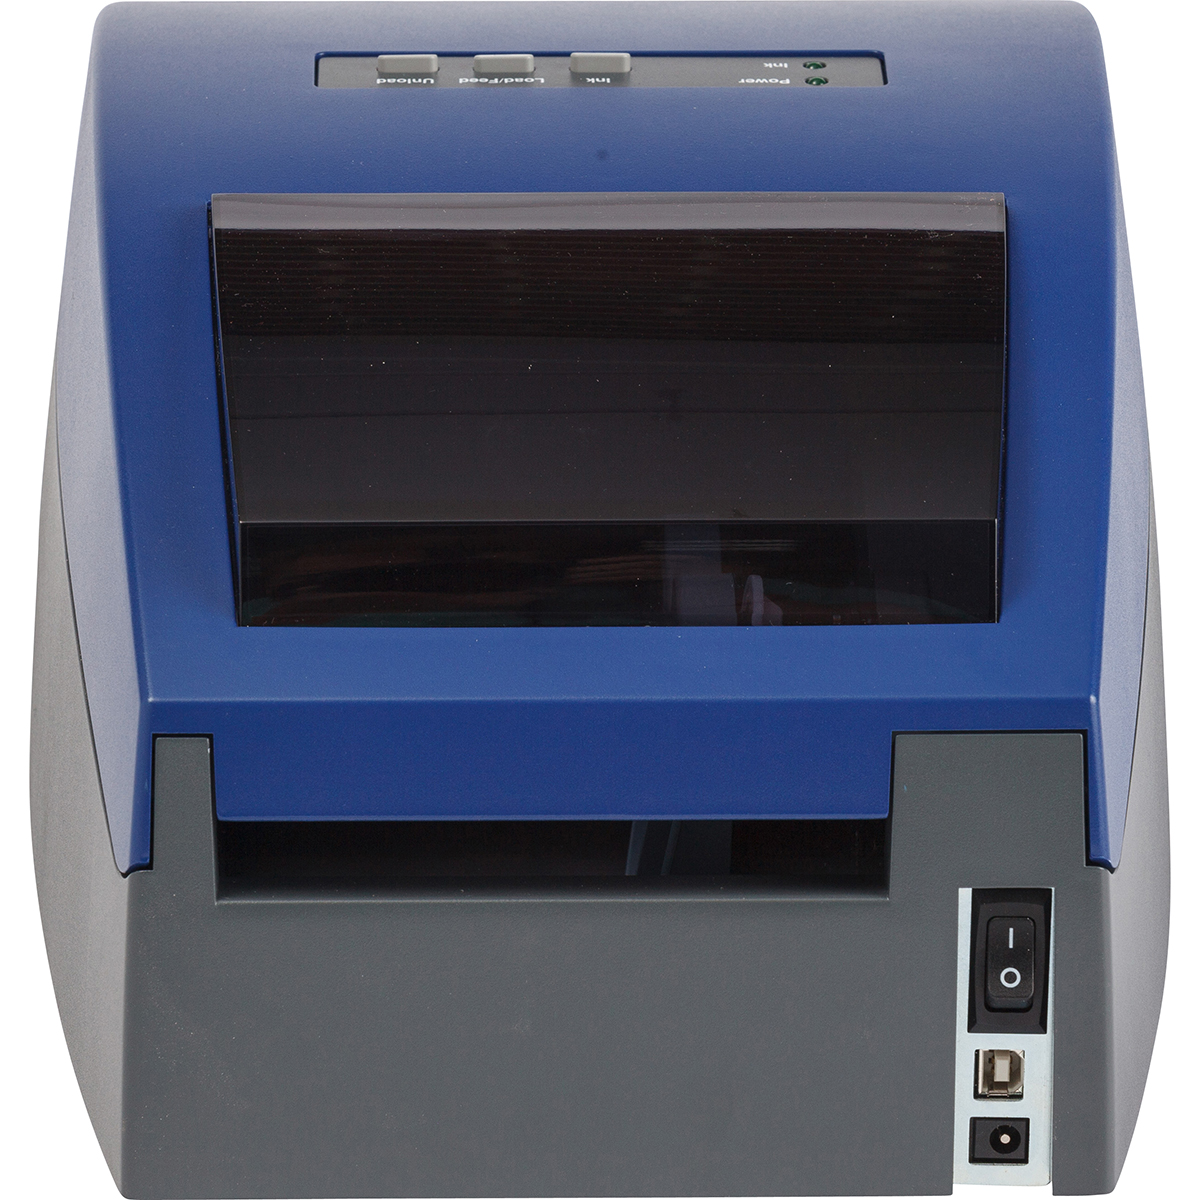 BradyJet J2000 Kleurenlabelprinter – EU met Brady Workstation SFID-suite